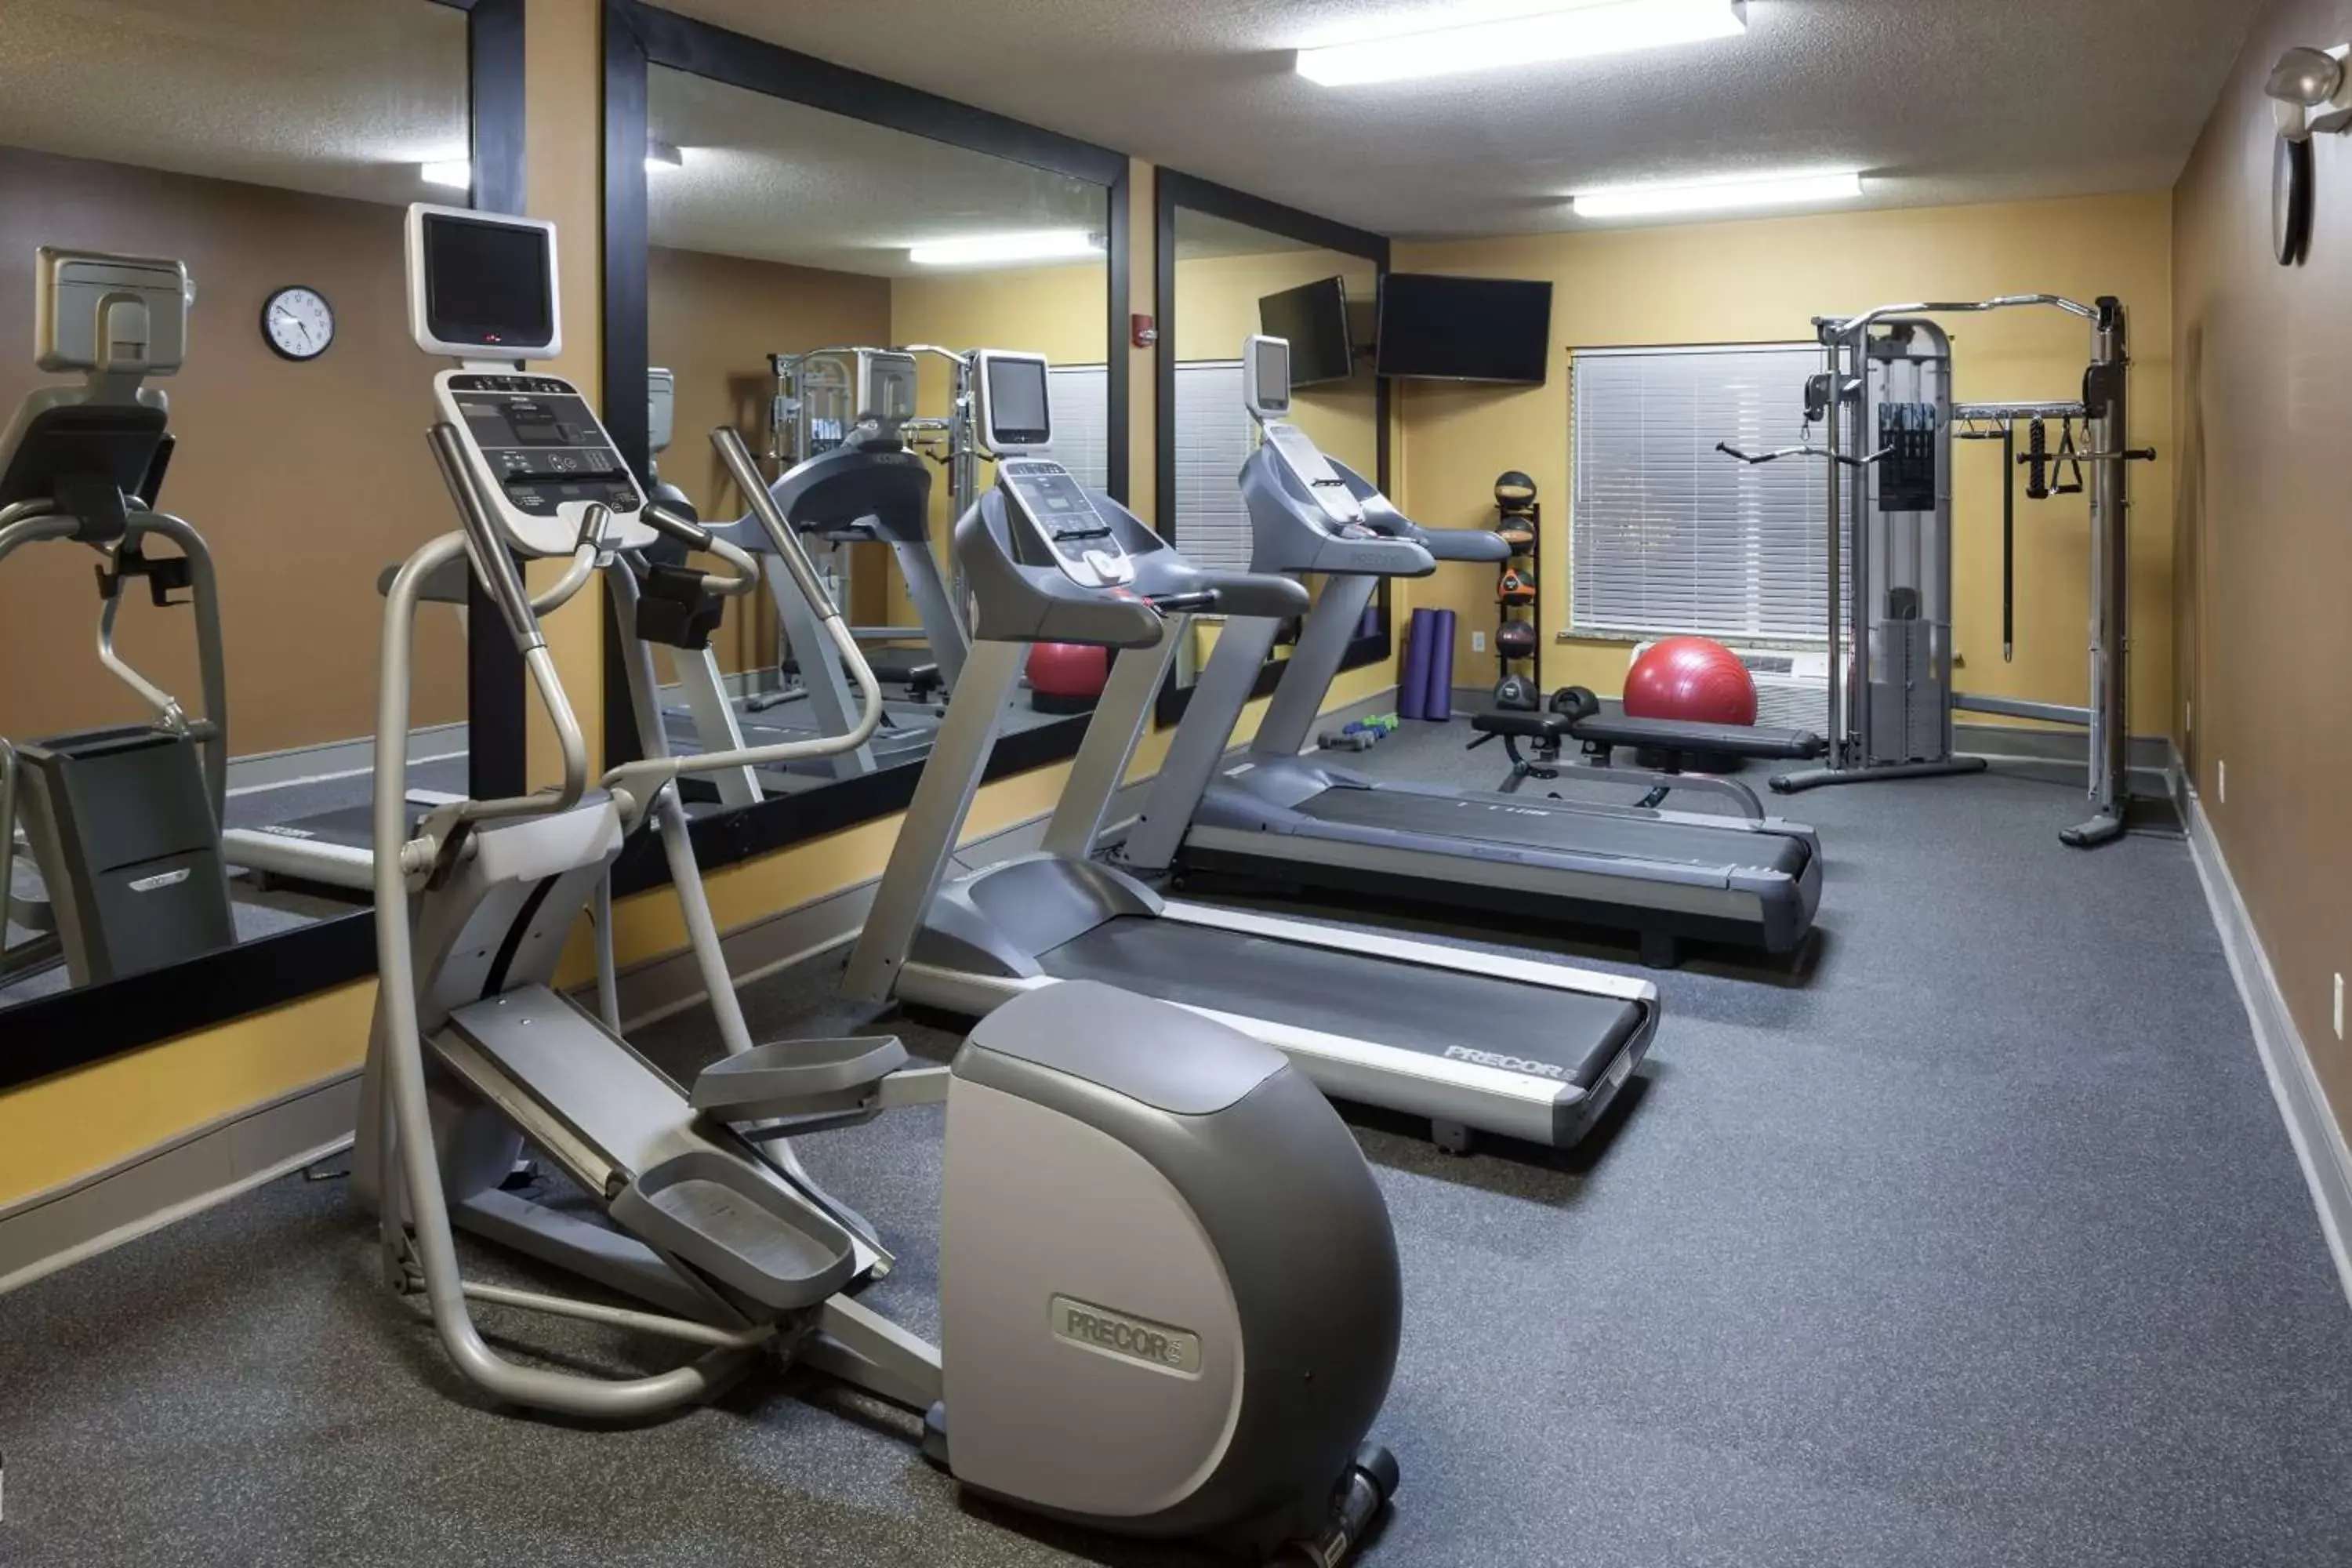 Fitness centre/facilities, Fitness Center/Facilities in Hilton Garden Inn Hilton Head